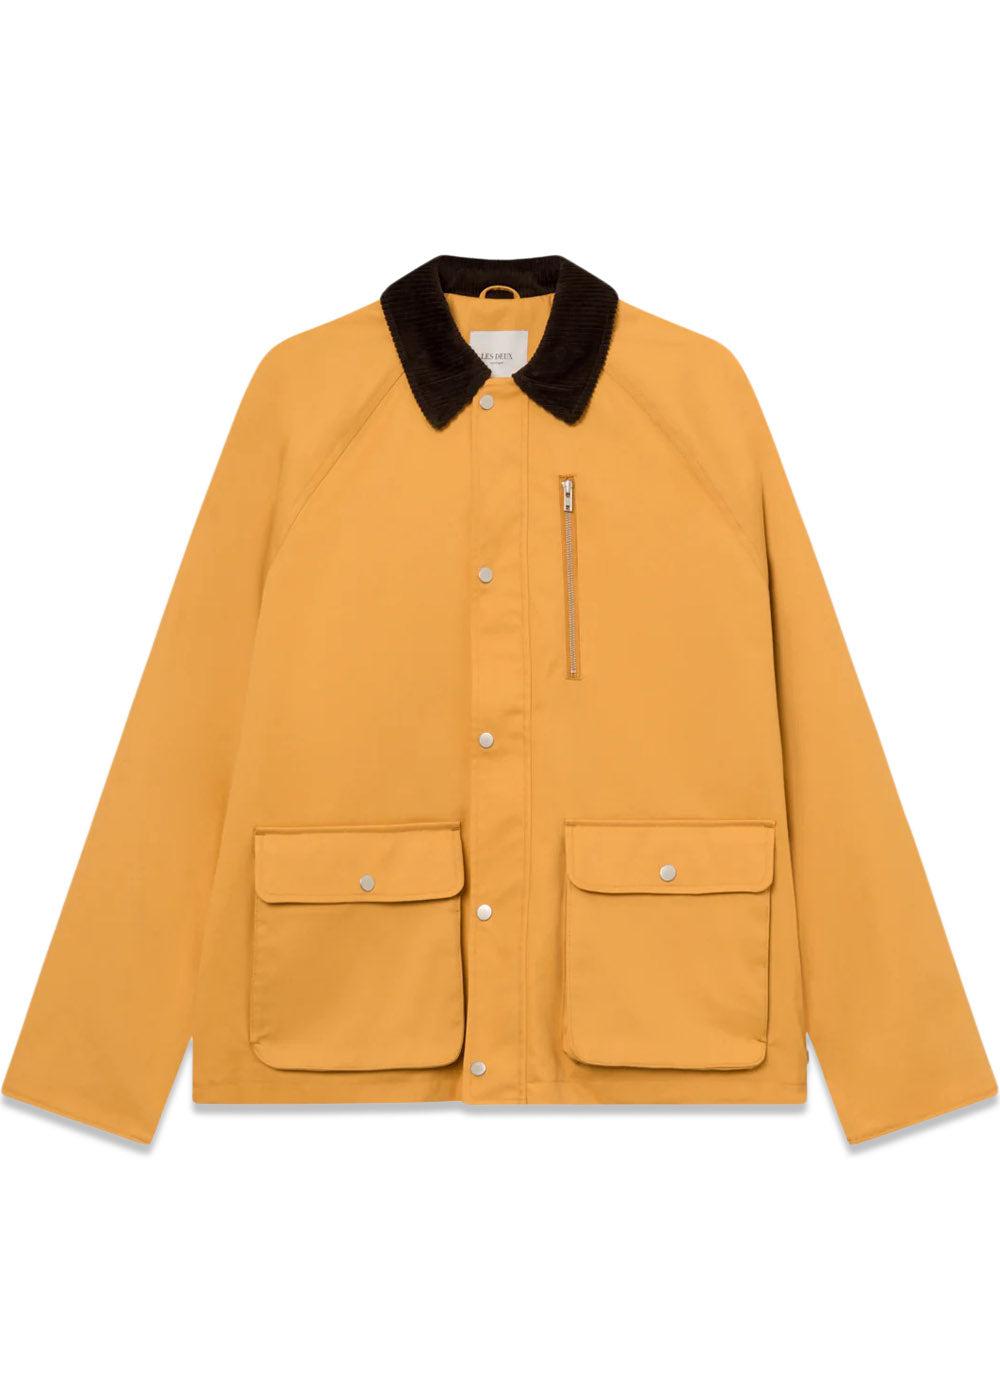 Montana Jacket 2.0 - Mustard Yellow